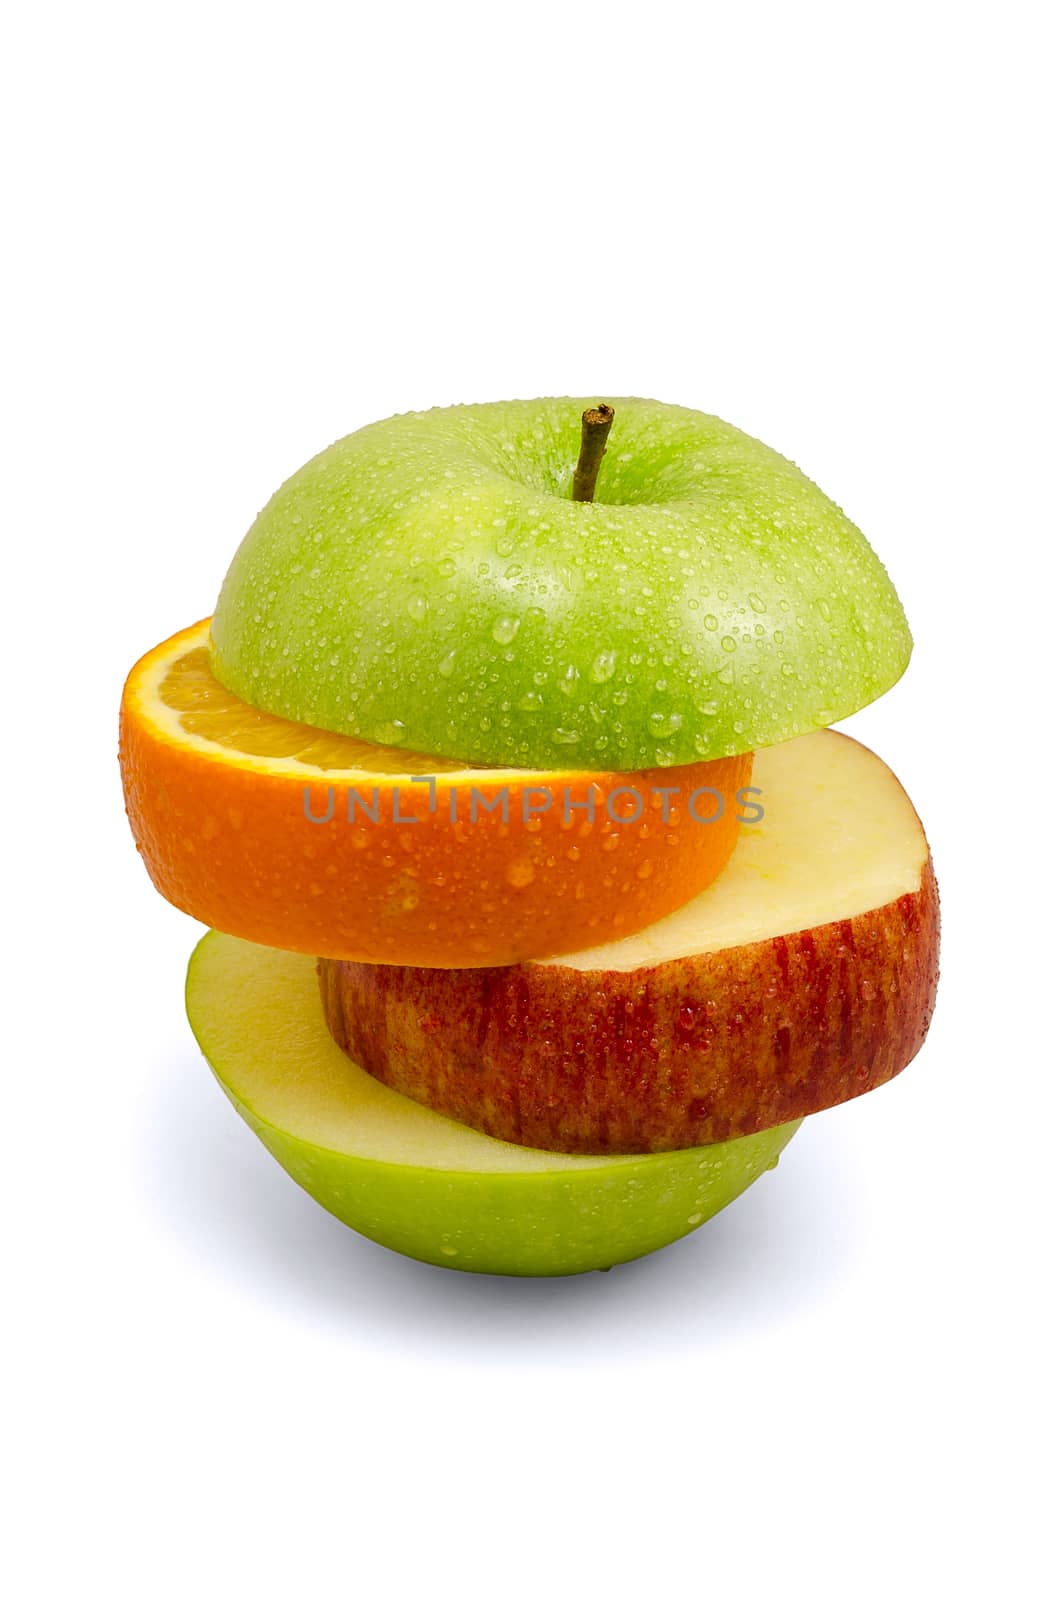 Apple and orange slices isolated on white background